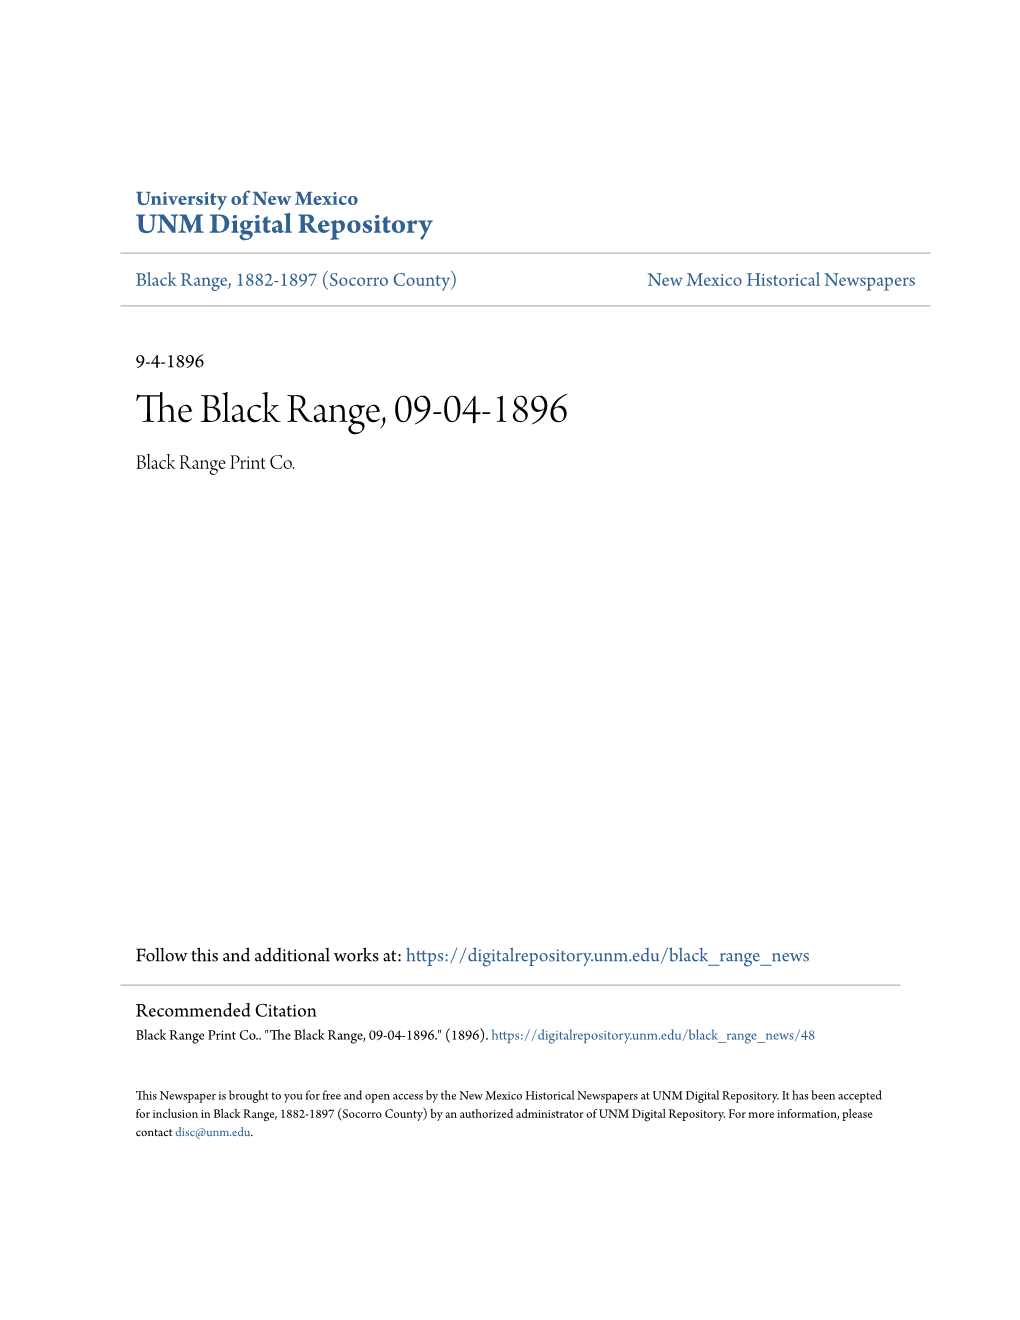 The Black Range, 09-04-1896